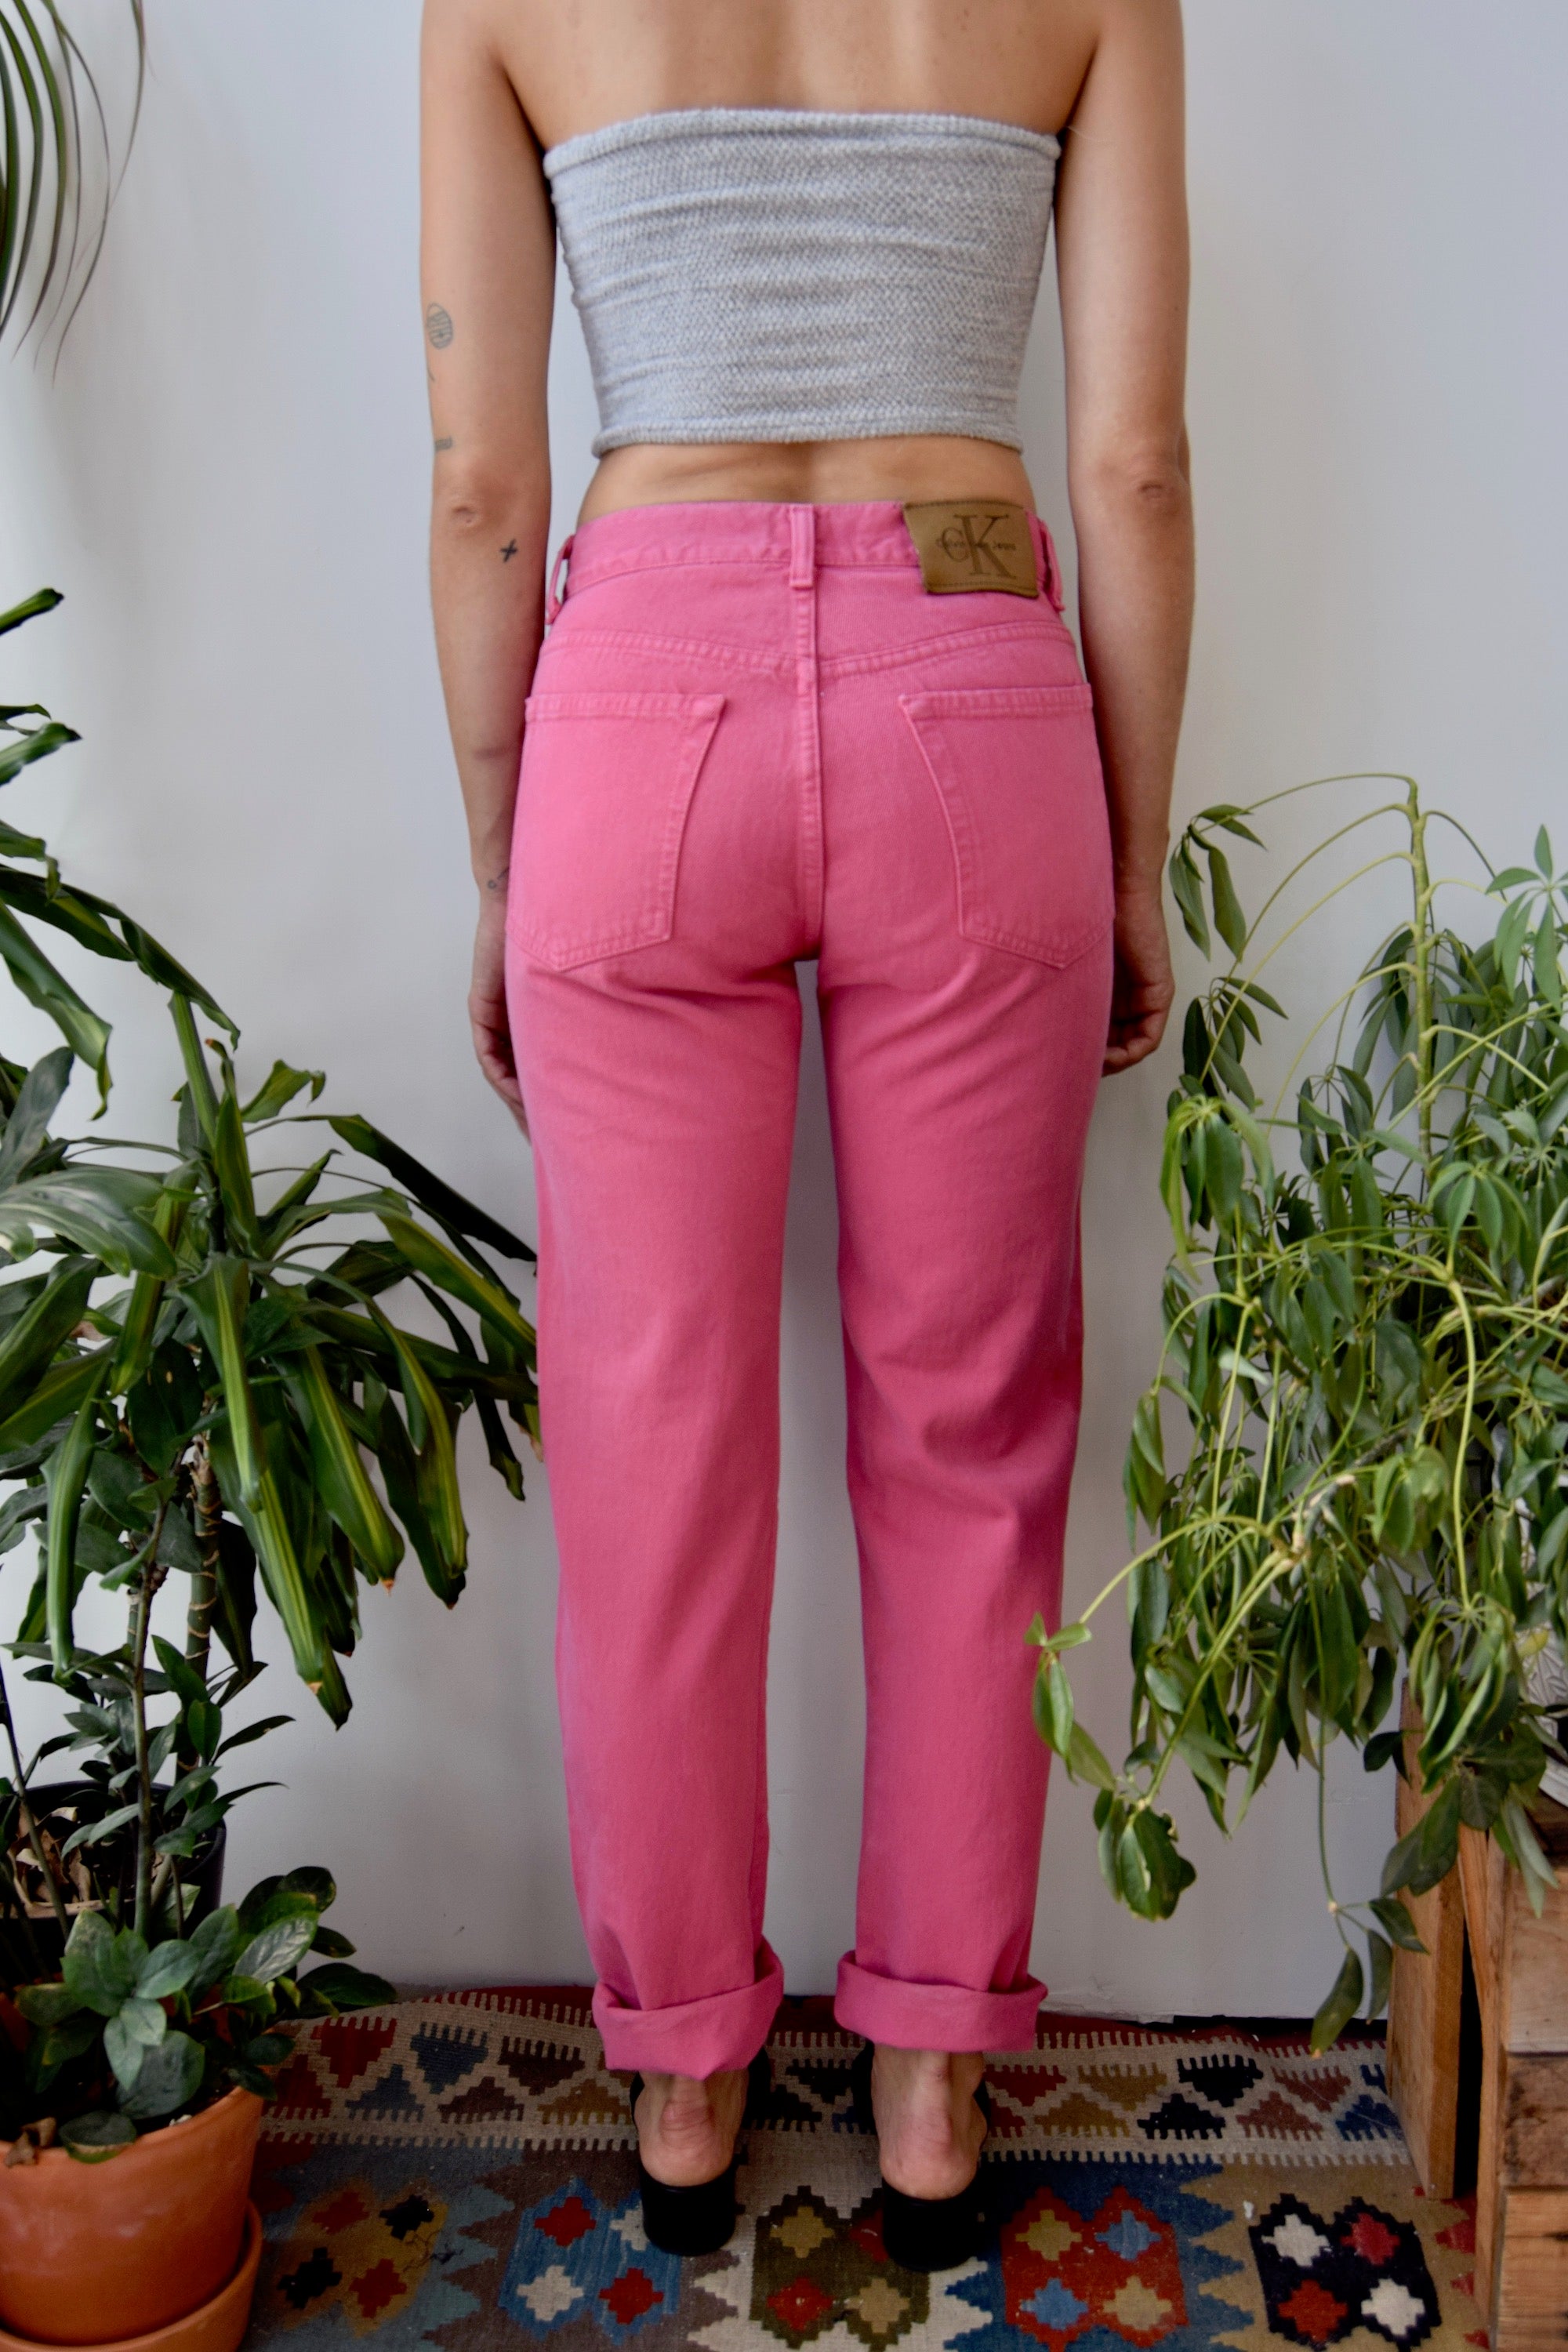 Bubblegum Pink CK Jeans